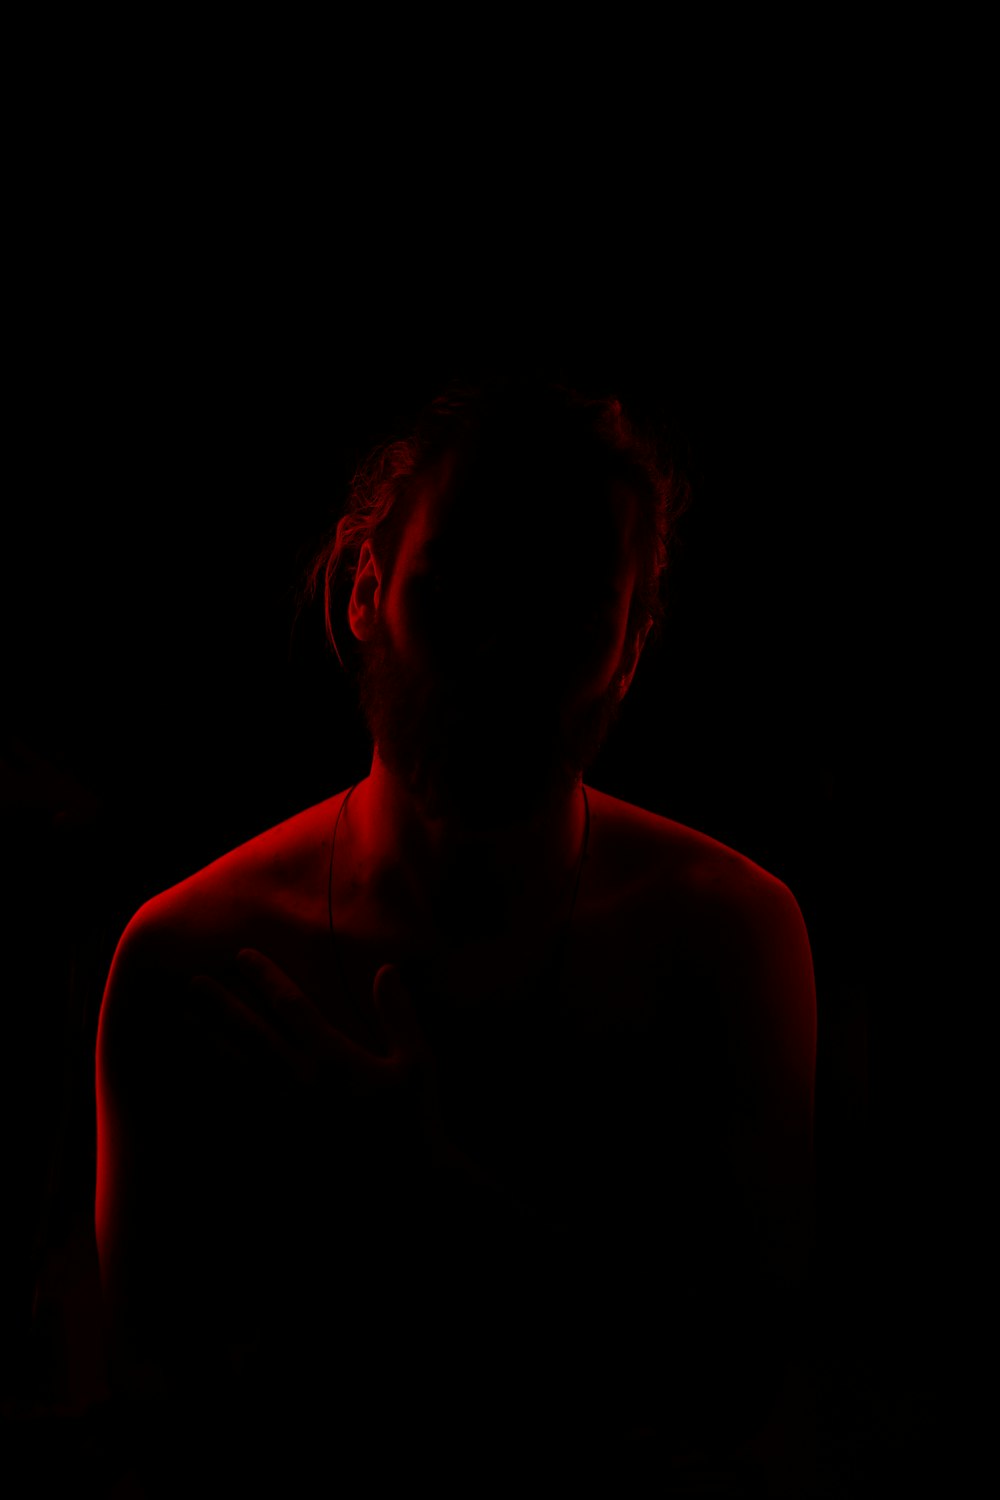 Una donna in una stanza buia con una luce rossa